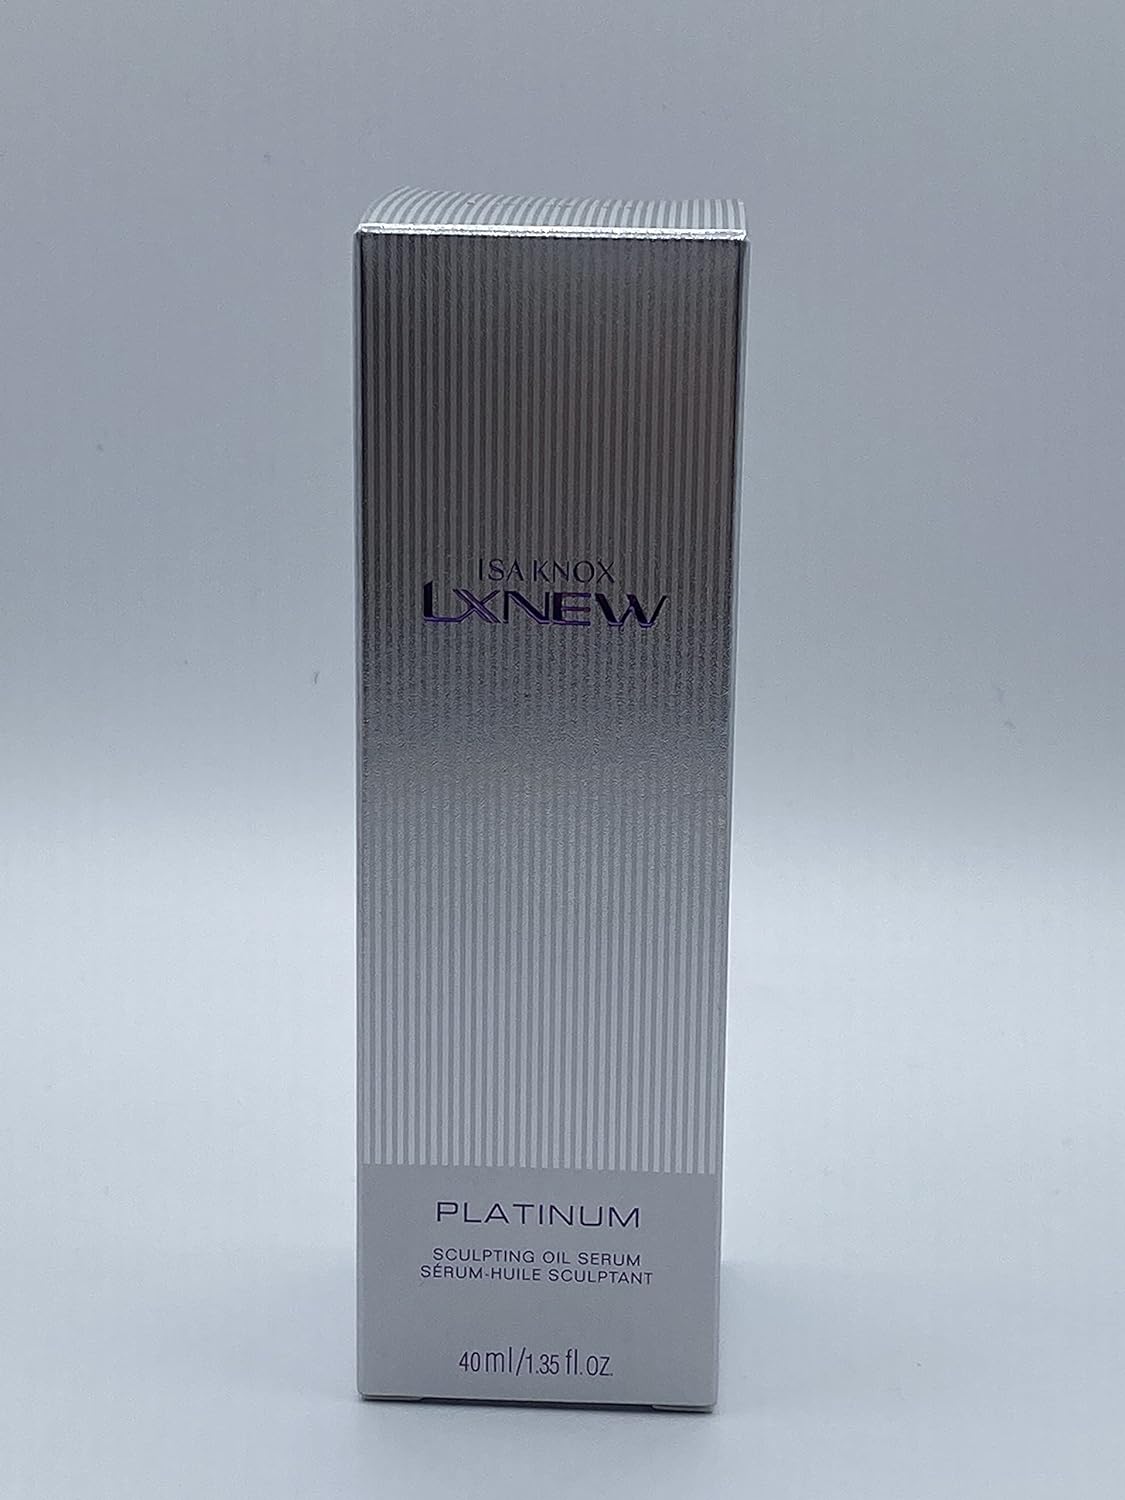 Esupli.com Avon Company Isa Knox Lxnew Platinum Sculpting Oil Serum